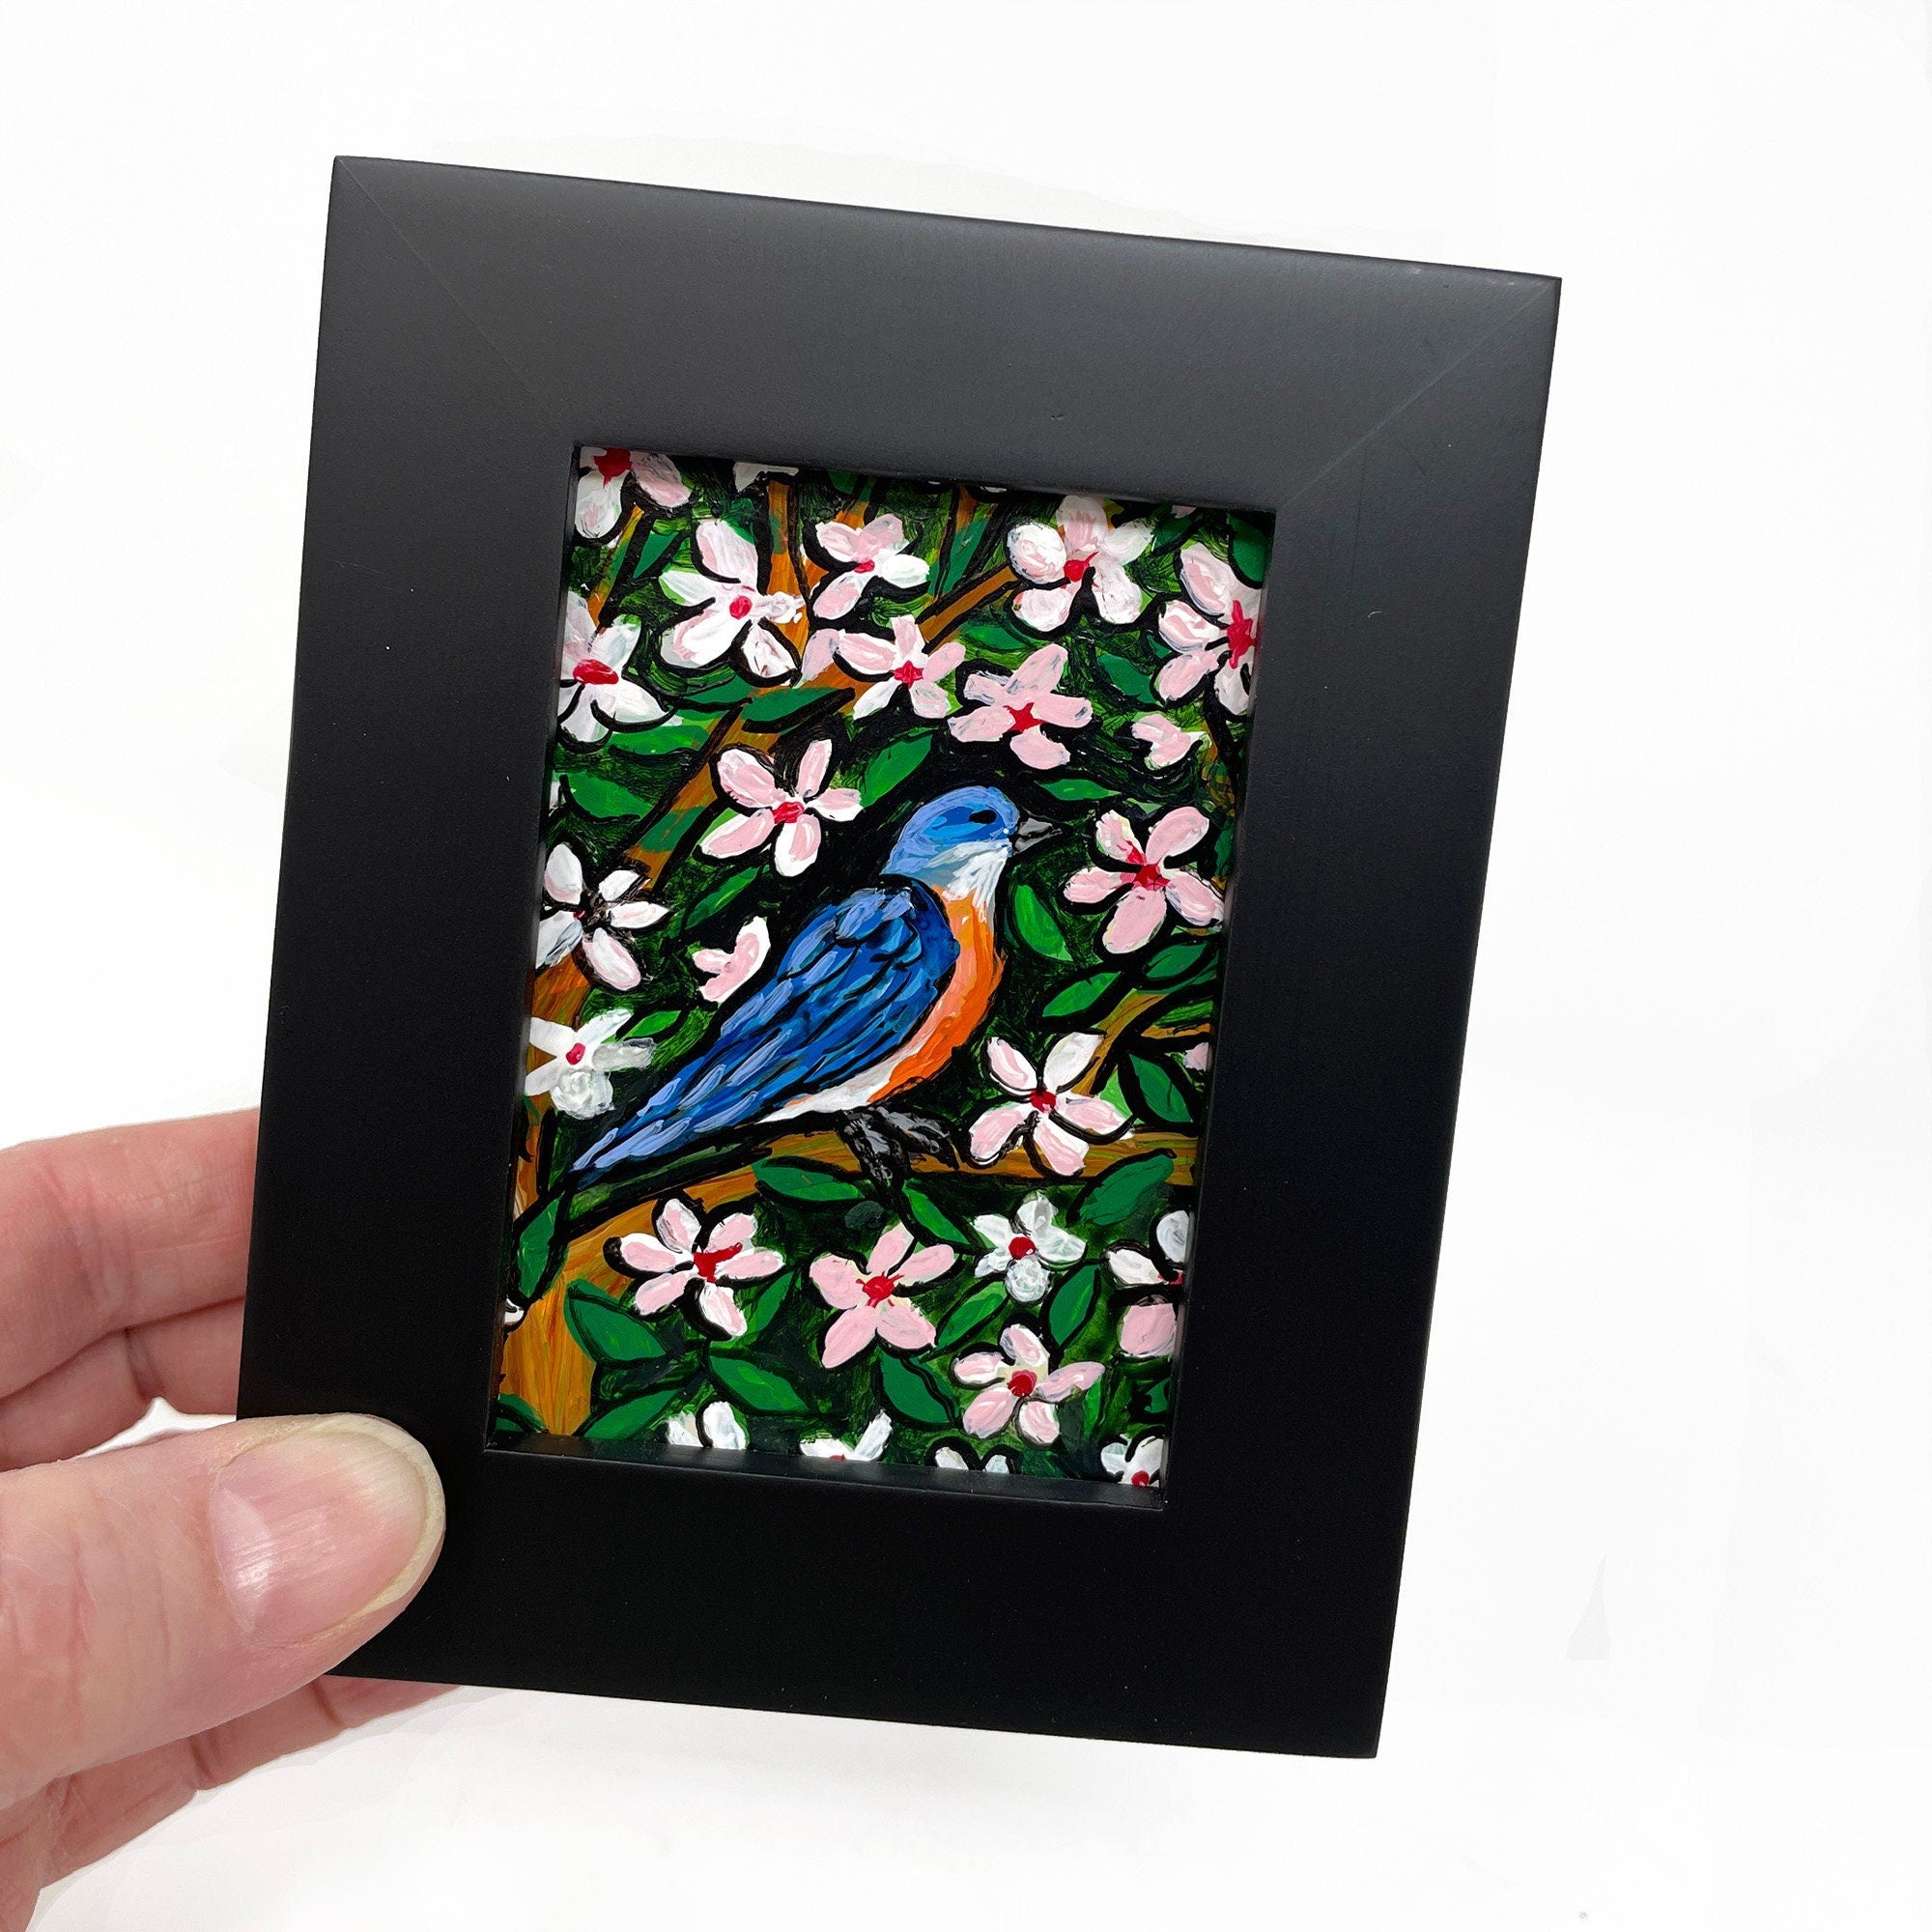 Small Bluebird Painting - Eastern Blue Bird with Cherry Blossoms - Framed Mini Bird Art for Your Desk, Shelf, Wall - Animal, Bird Lover Gift